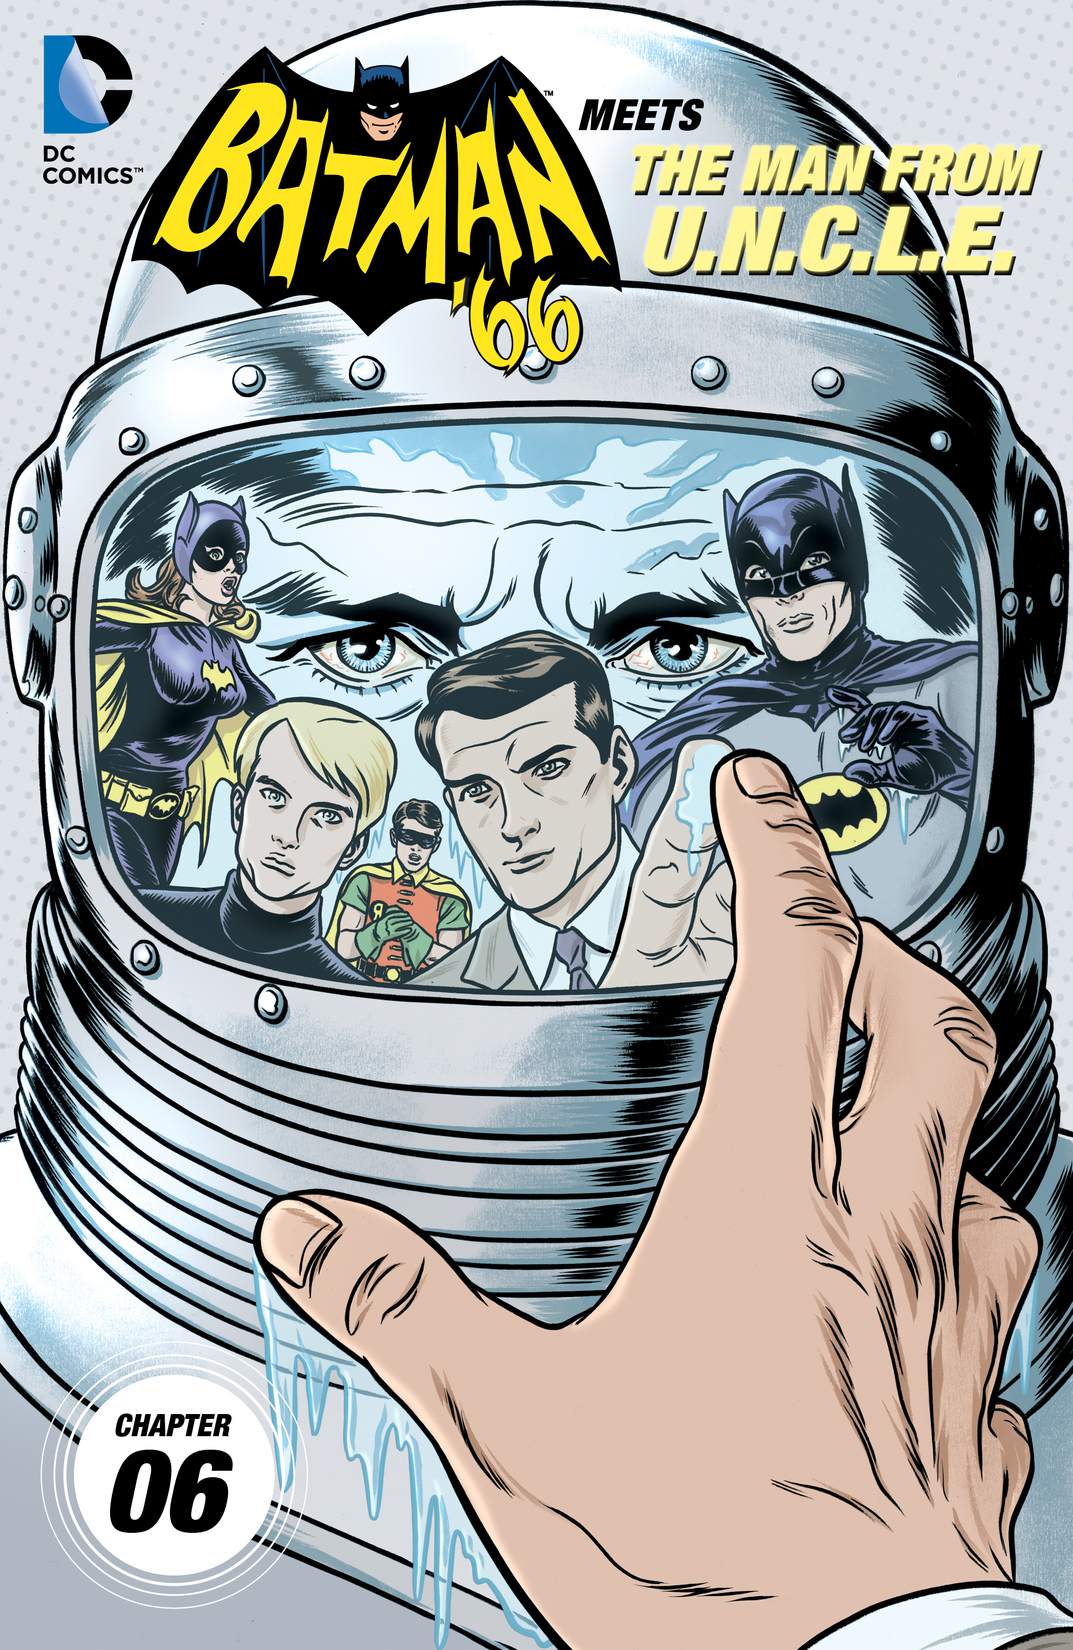 Batman '66 Meets The Man From U.N.C.L.E. #6 preview images